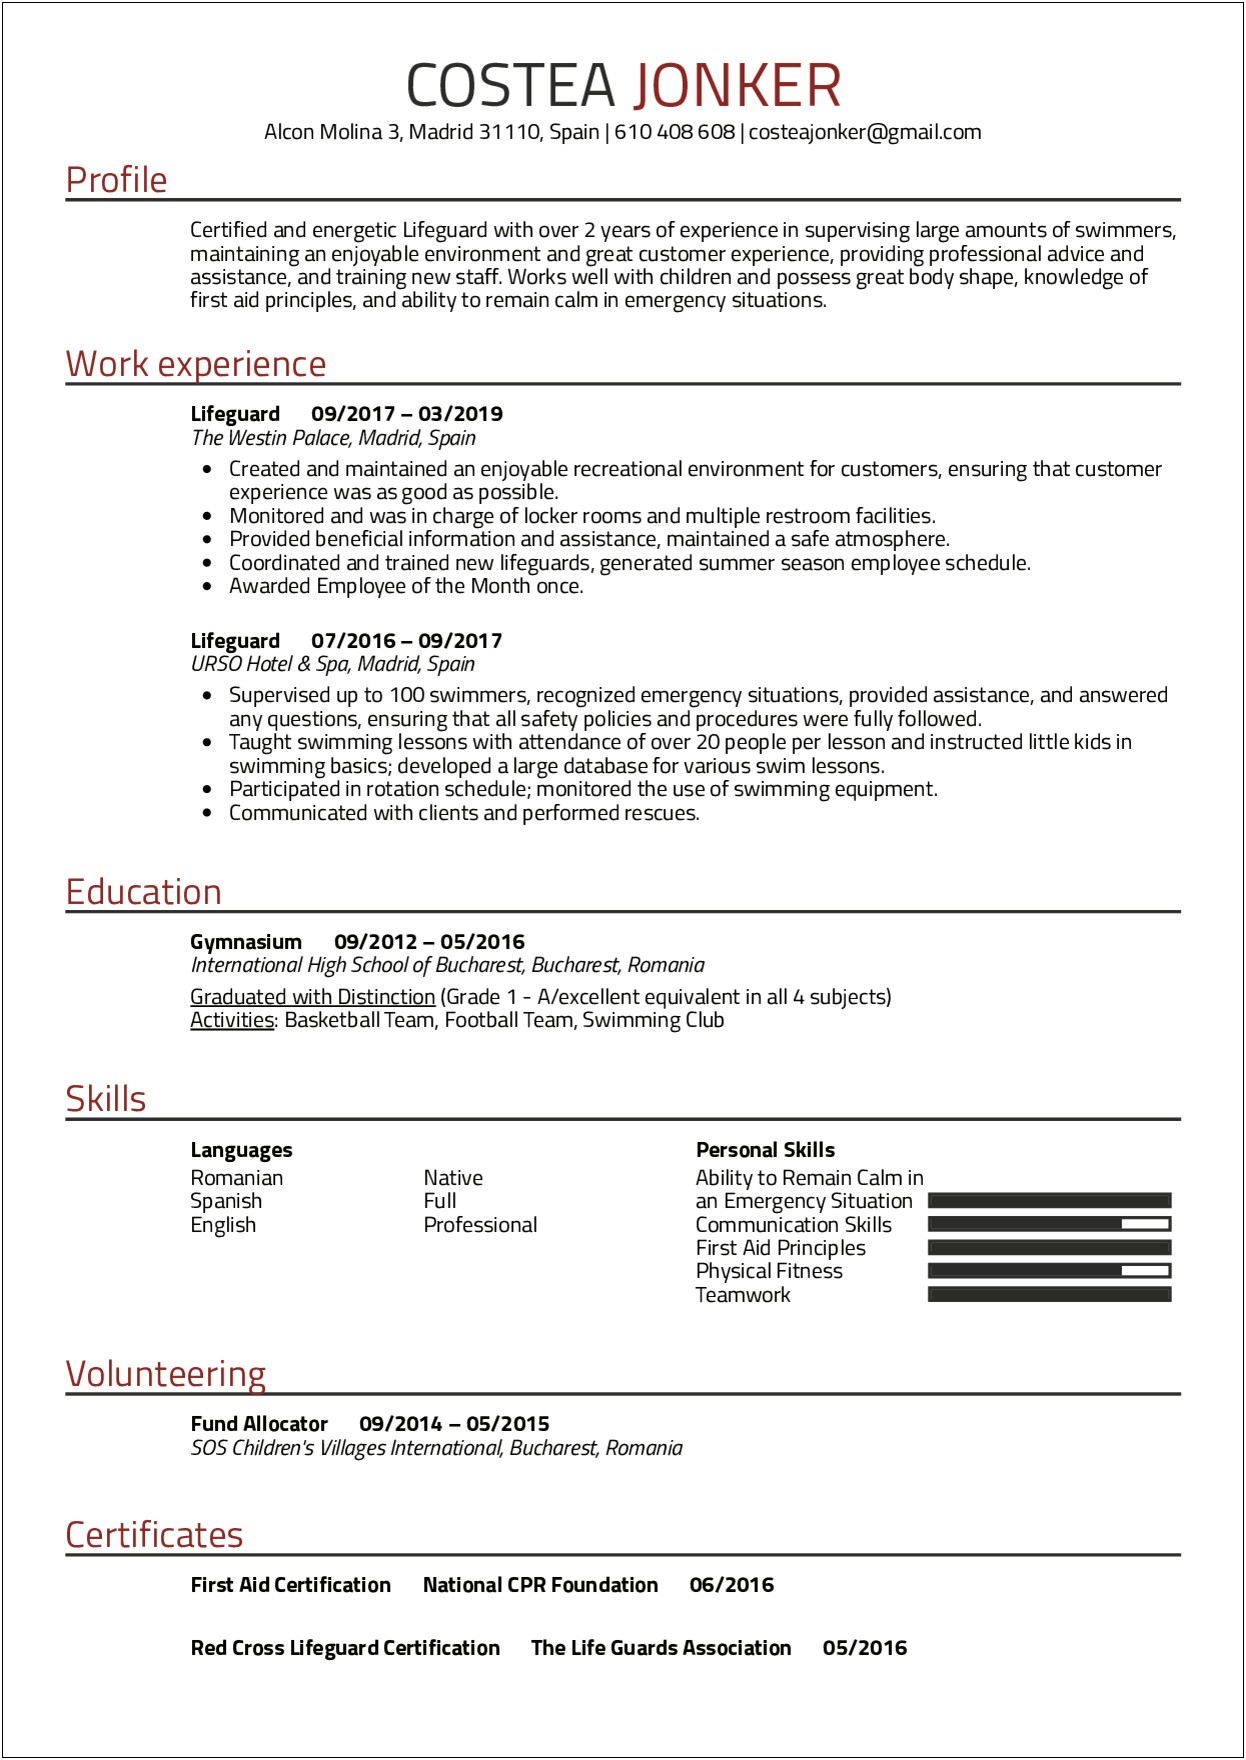 Resume Objective To Lifeguard Job